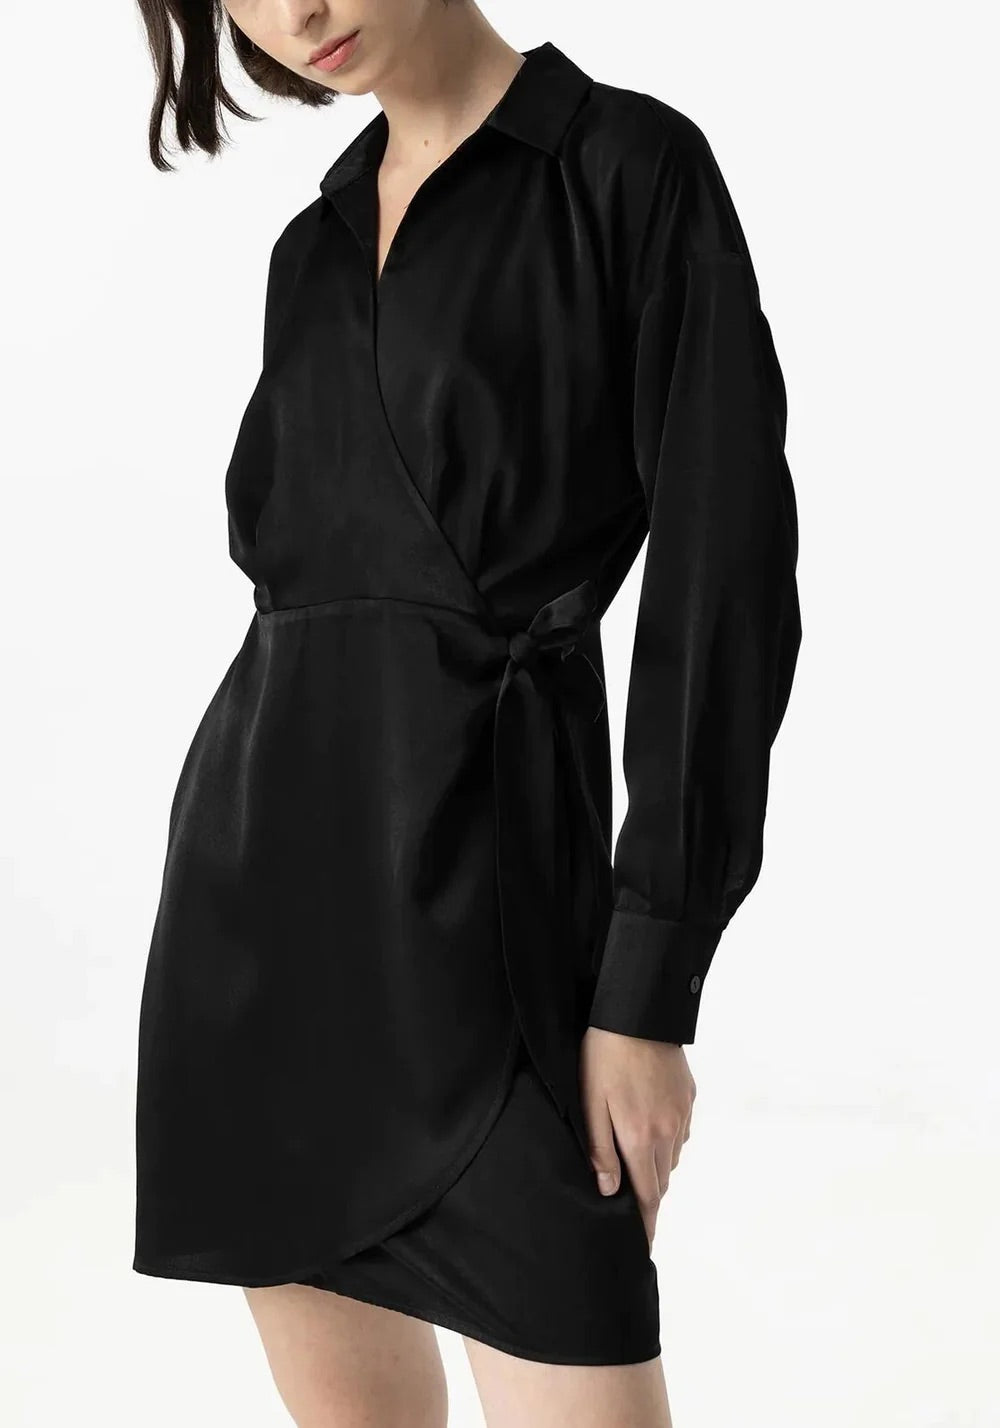 Compostela black dress